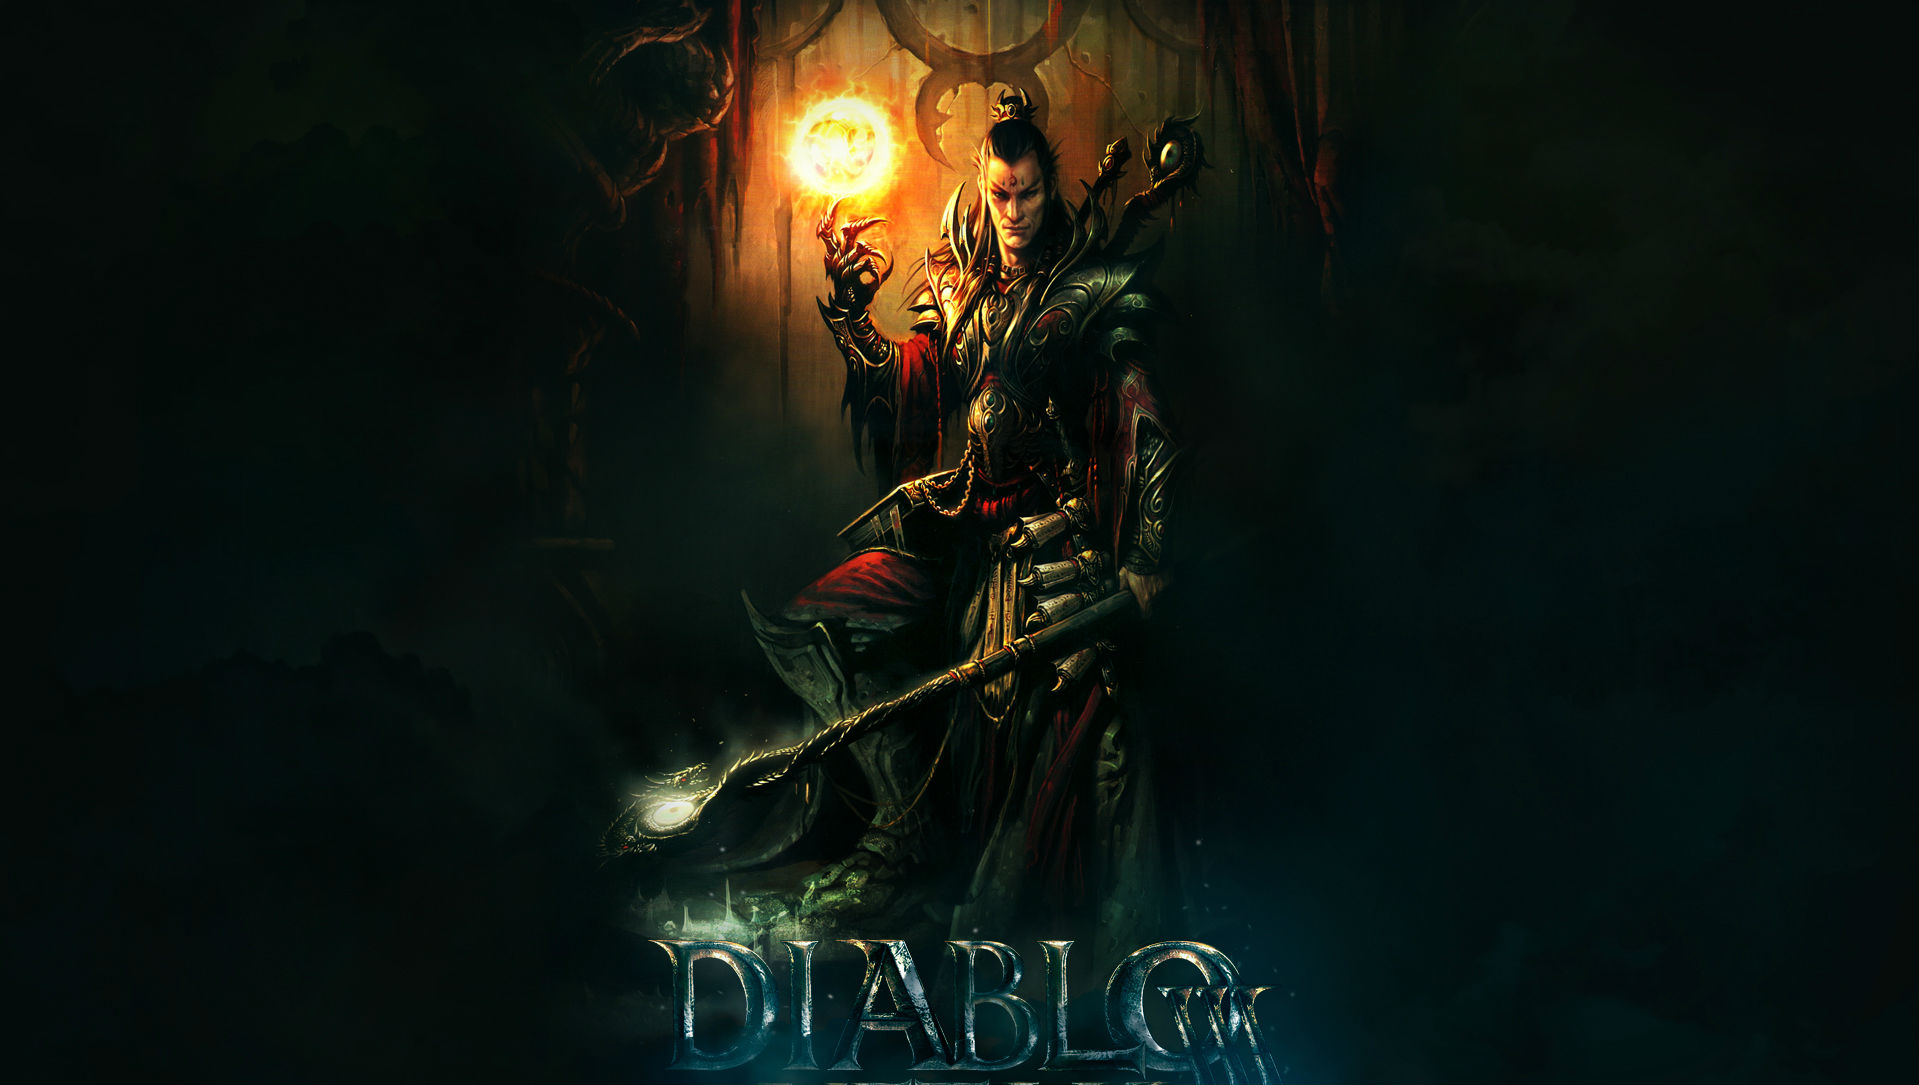 Baixe gratuitamente a imagem Fantasia, Diablo, Videogame, Diablo Iii, Mago (Diablo Iii) na área de trabalho do seu PC